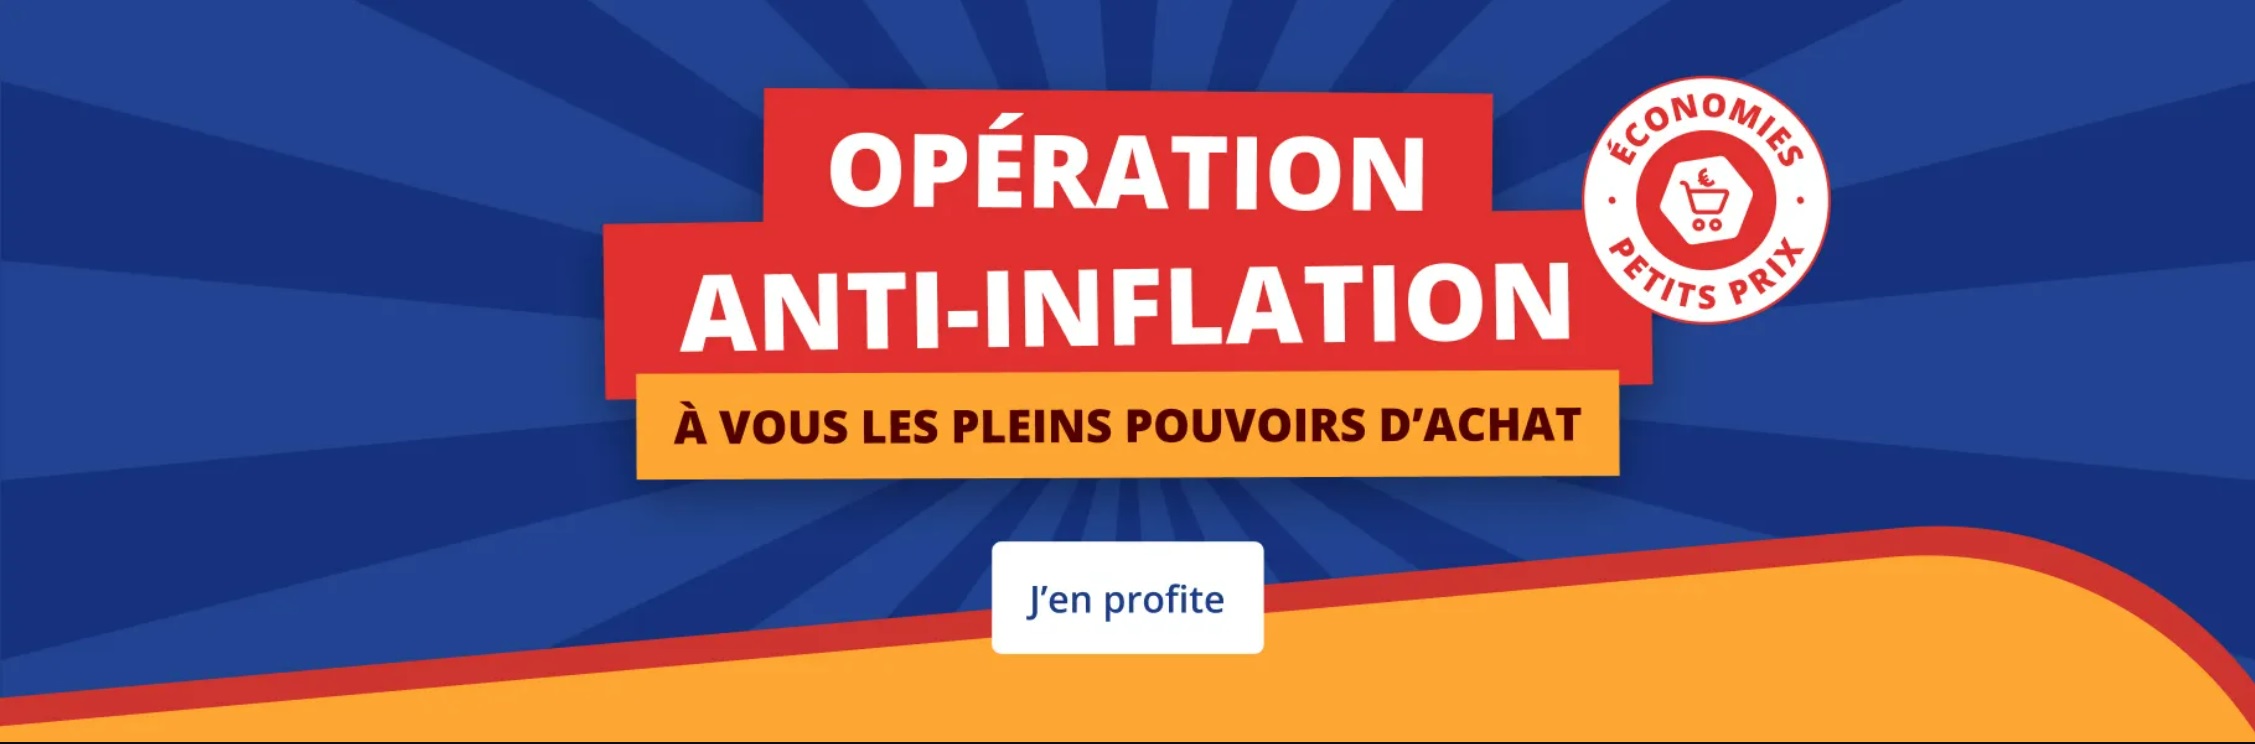 operation-anti-inflation